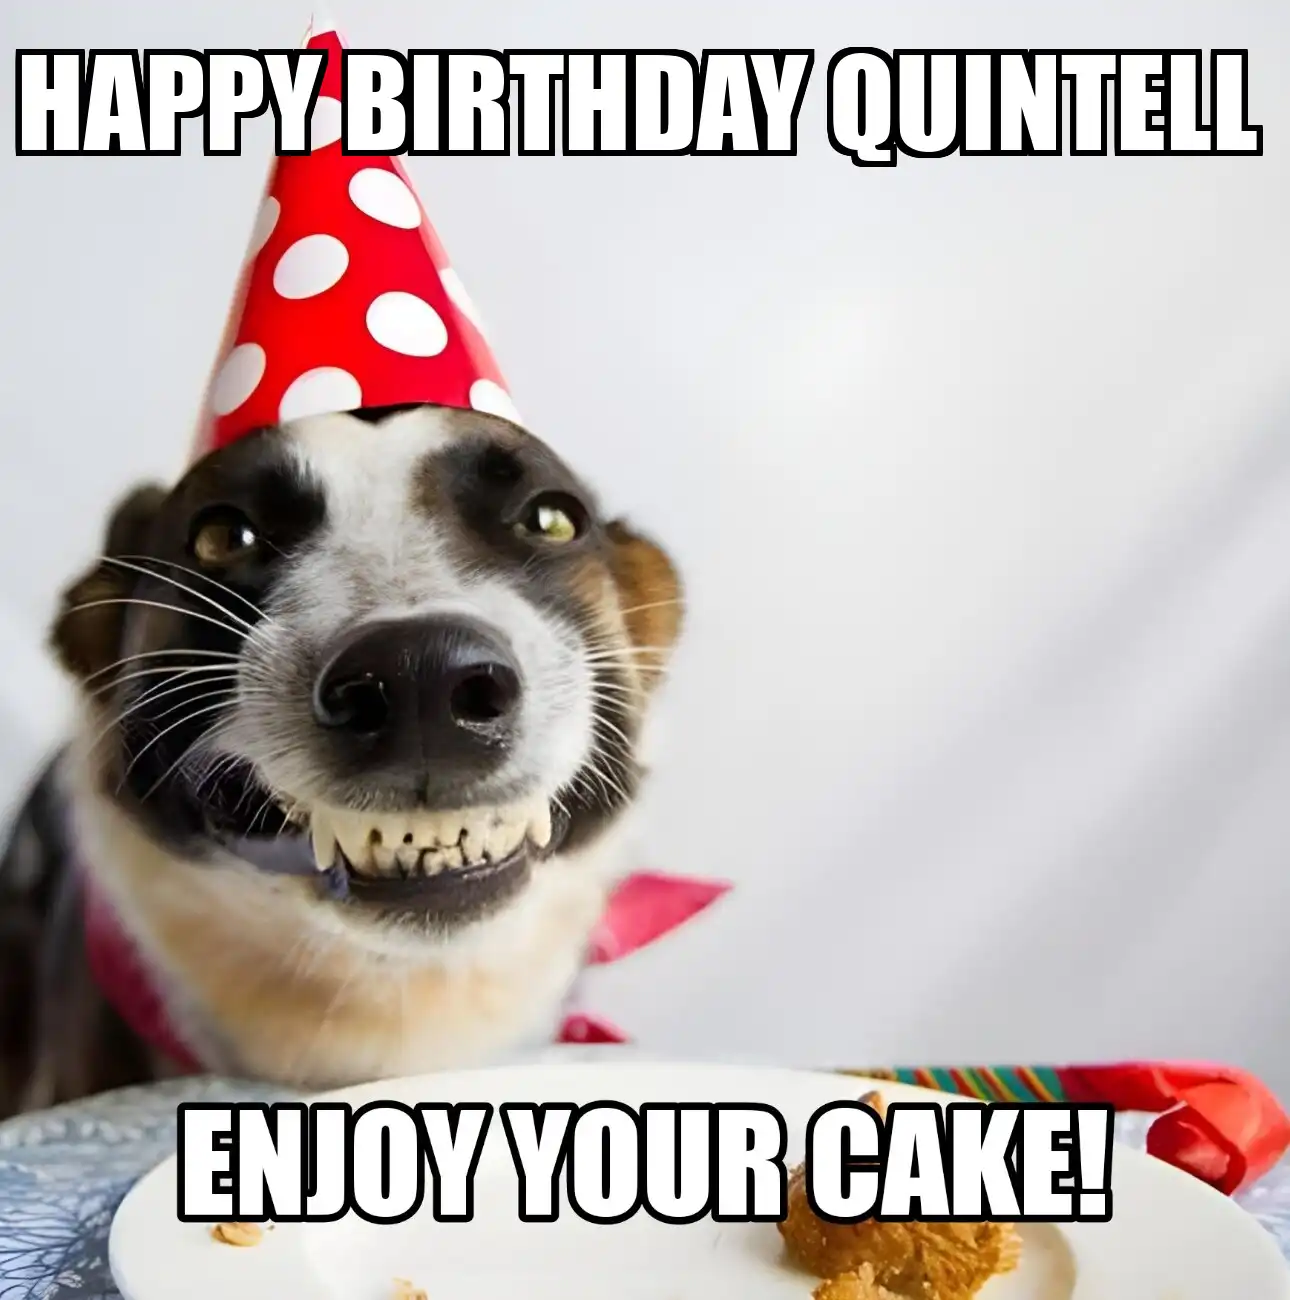 Happy Birthday Quintell Enjoy Your Cake Dog Meme